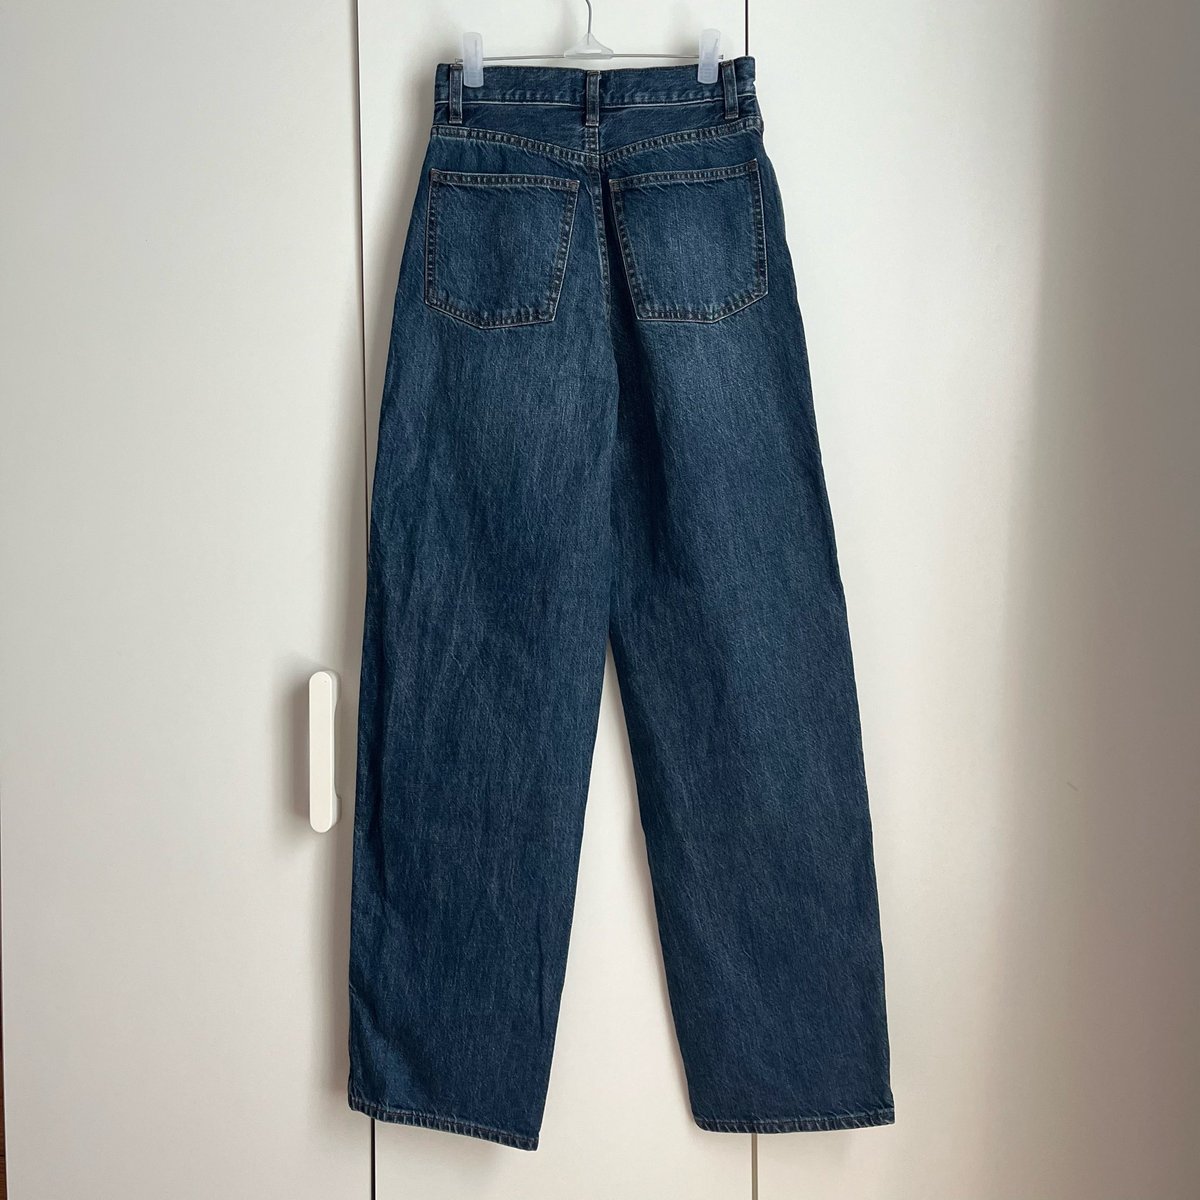 Uniqlo Jeans ขากระบอกตรง
Size (23) เอว 25-26 สะโพก 35-36 ยาว 42
Price : 590 THB (from1490)

#เสื้อผ้ามือสอง #ส่งต่อเสื้อผ้ามือสอง #โล๊ะตู้เสื้อผ้า #ส่งต่อเสื้อผ้า #vghbkk #stylistshop #cintageshop #ส่งต่อuniqlo #ส่งต่อhm #uniqlothailand #uniqloมือสอง